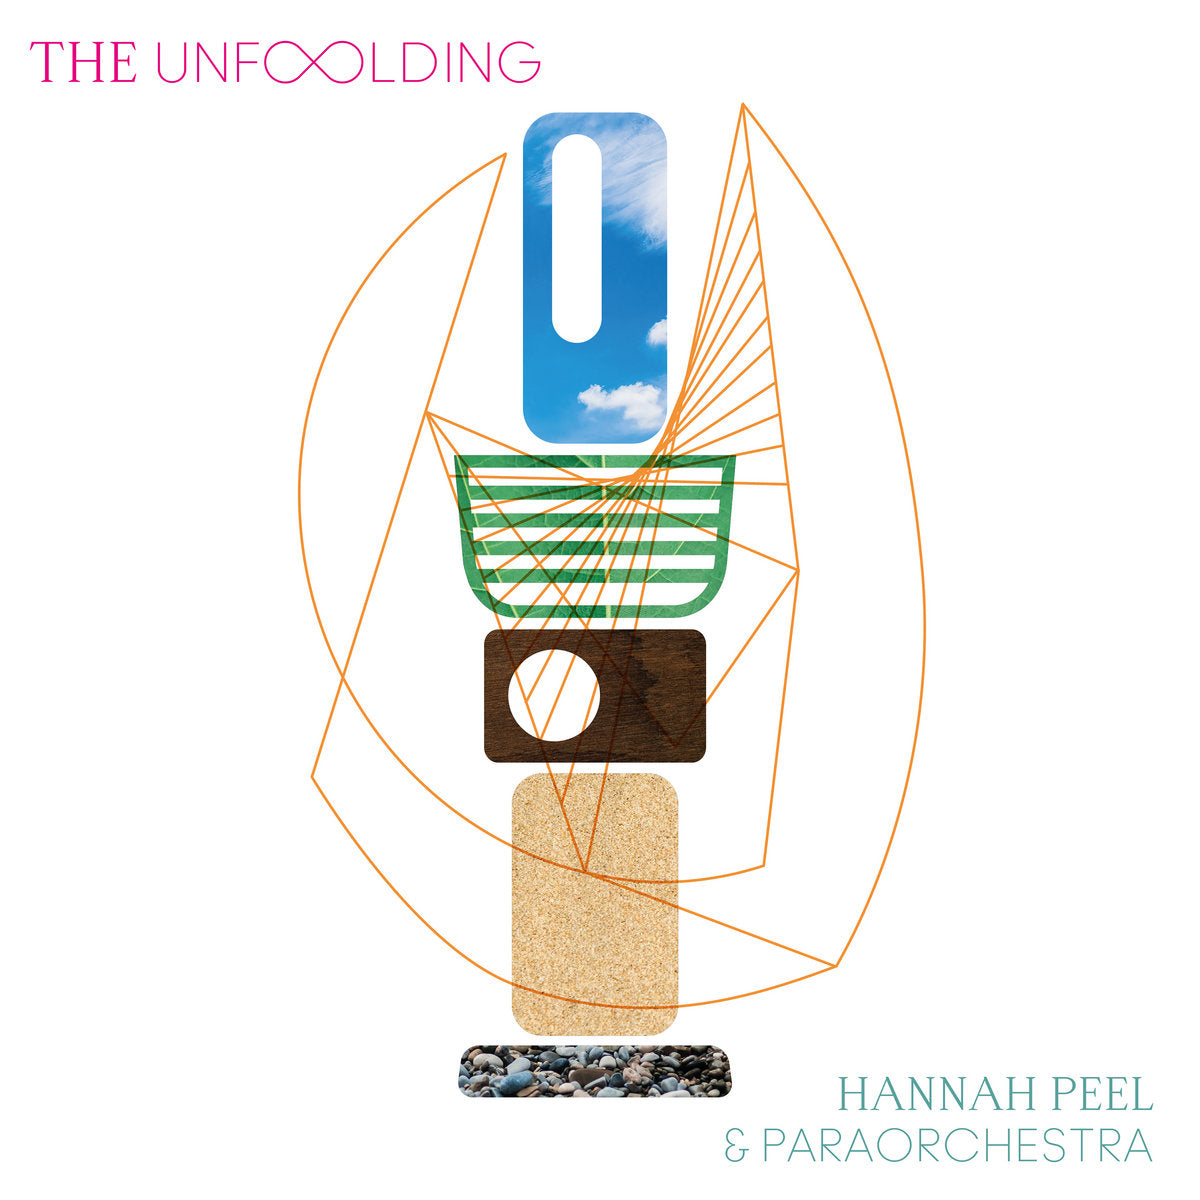 Hannah Peel & Paraorchestra - The Unfolding (Ltd Edition Coloured Vinyl) (Real World Records)